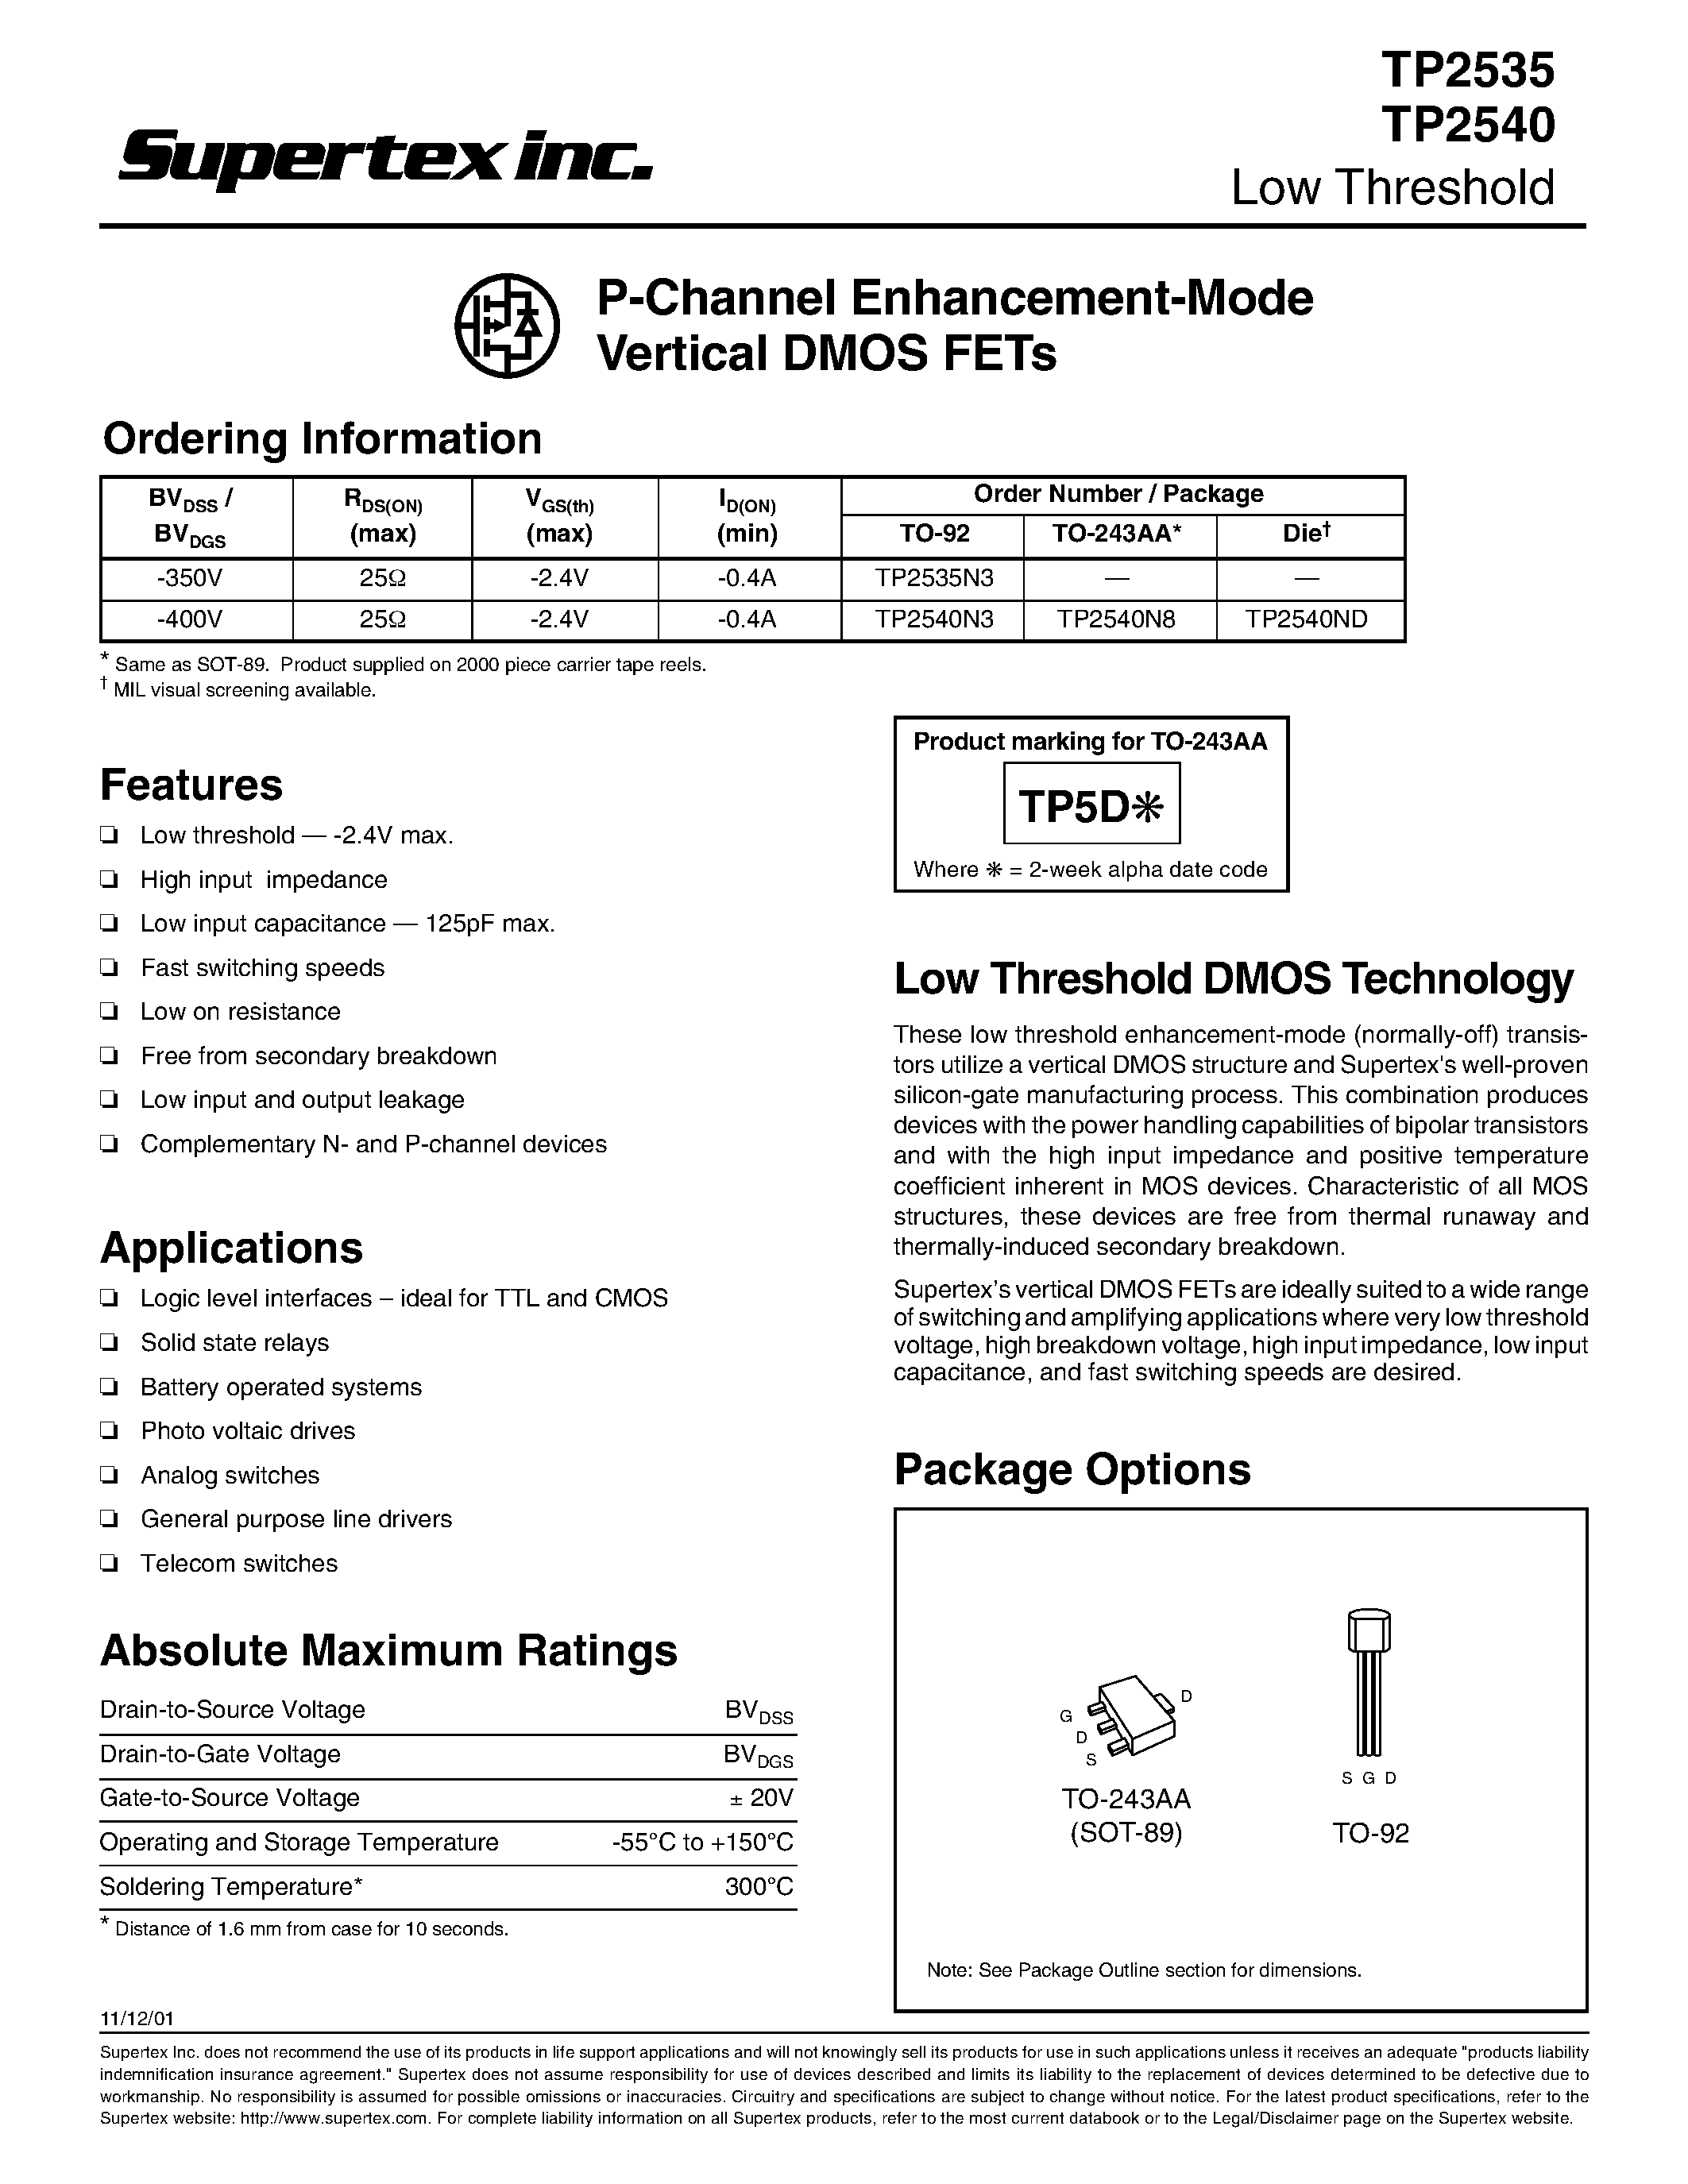 Datasheet TP2535N3 - P-Channel Enhancement-Mode Vertical DMOS FETs page 1